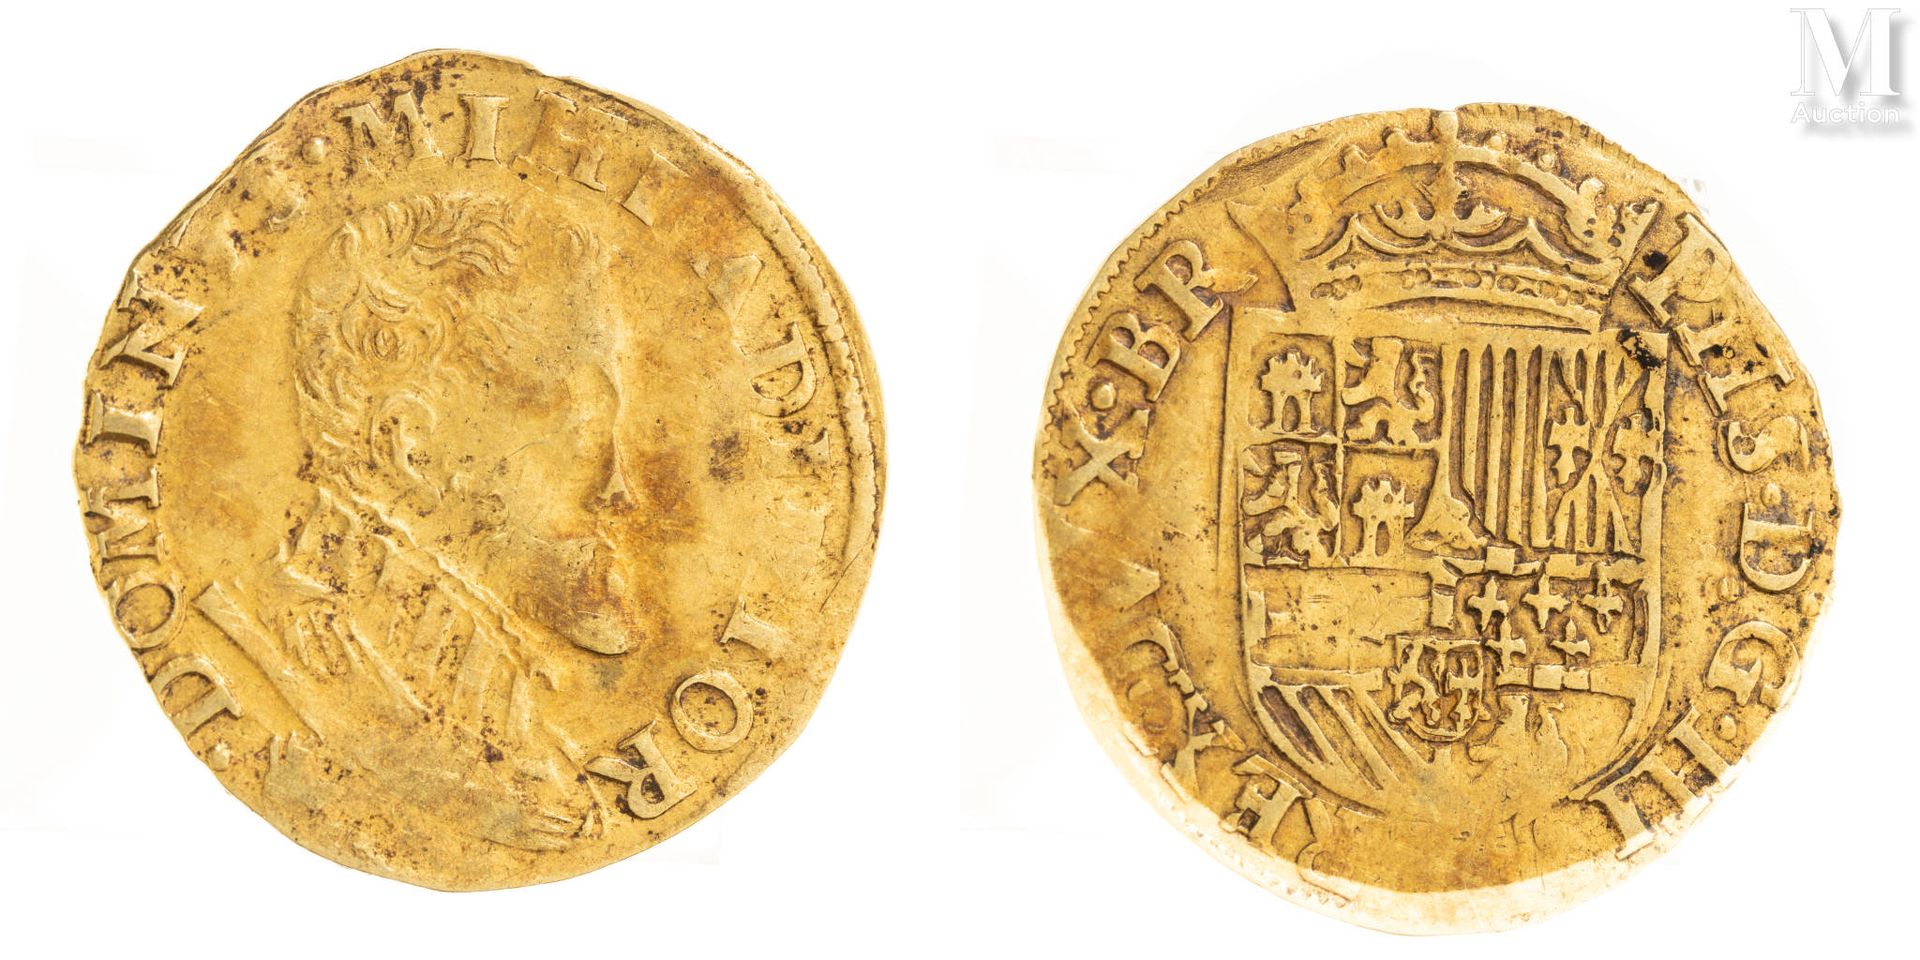 Brabant - Philippe II d'Espagne (1558-1576) Half-real from Antwerp
A: Flat-necke&hellip;